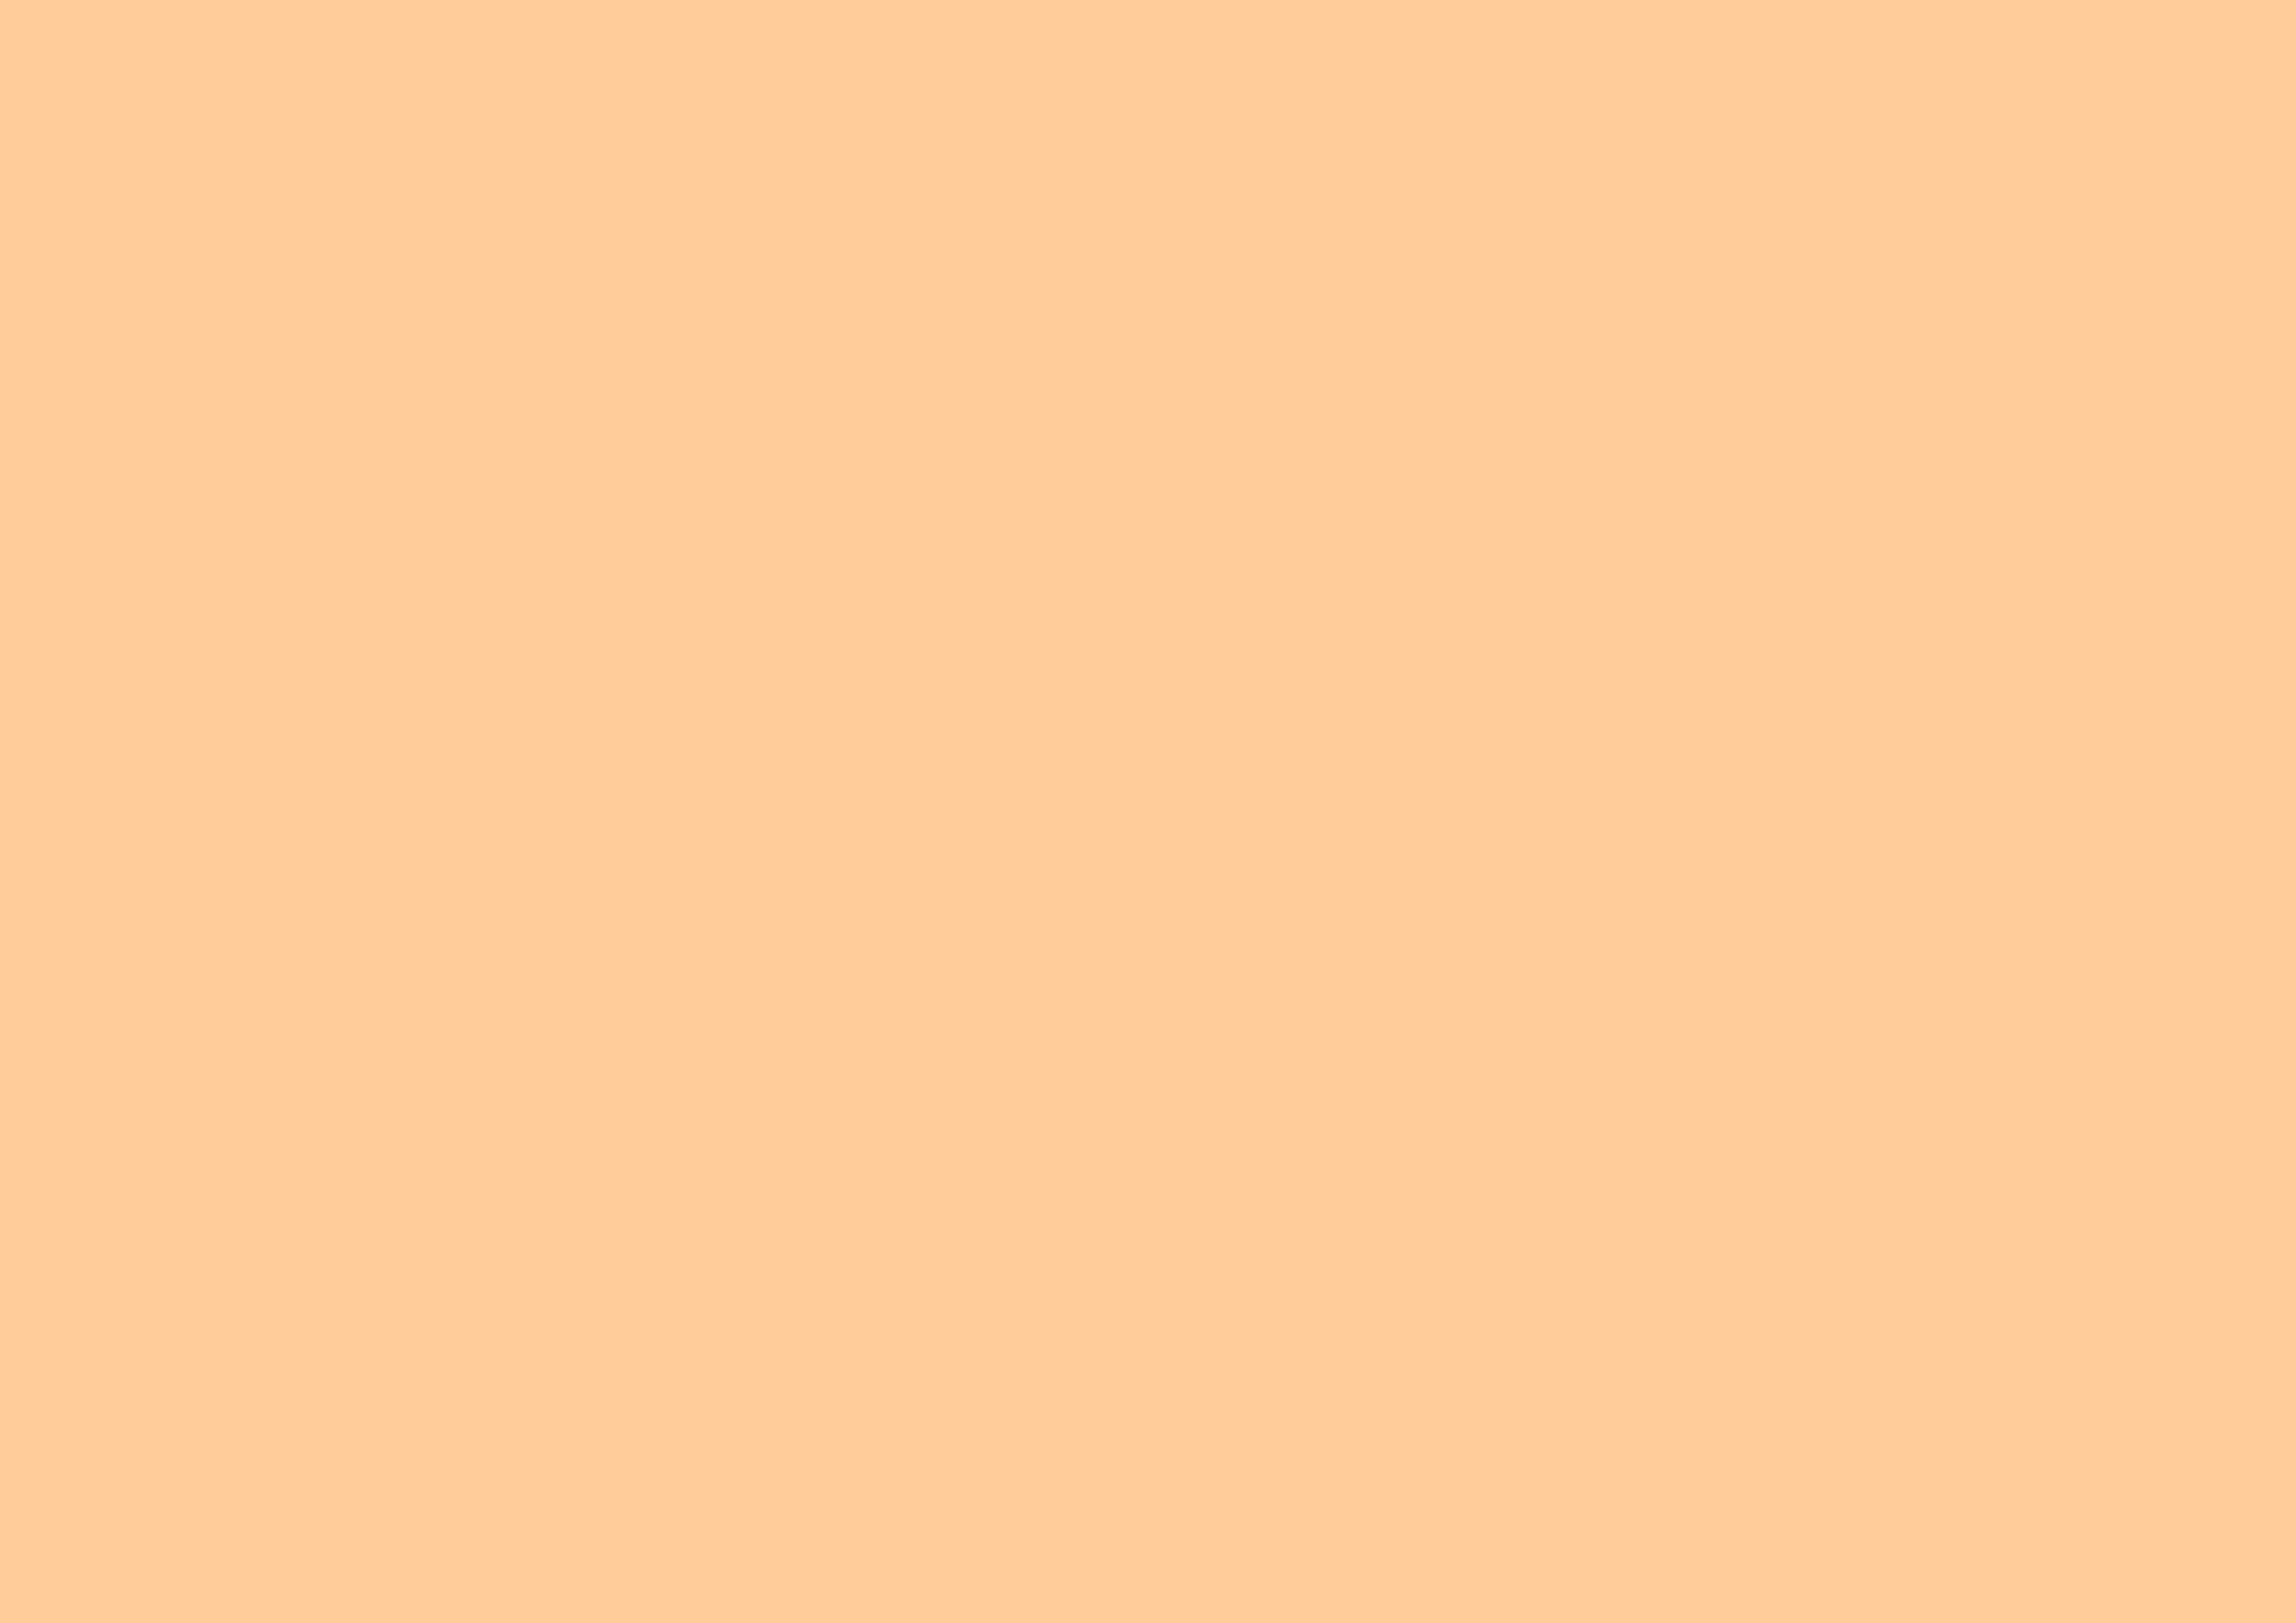 3508x2480 Peach-orange Solid Color Background